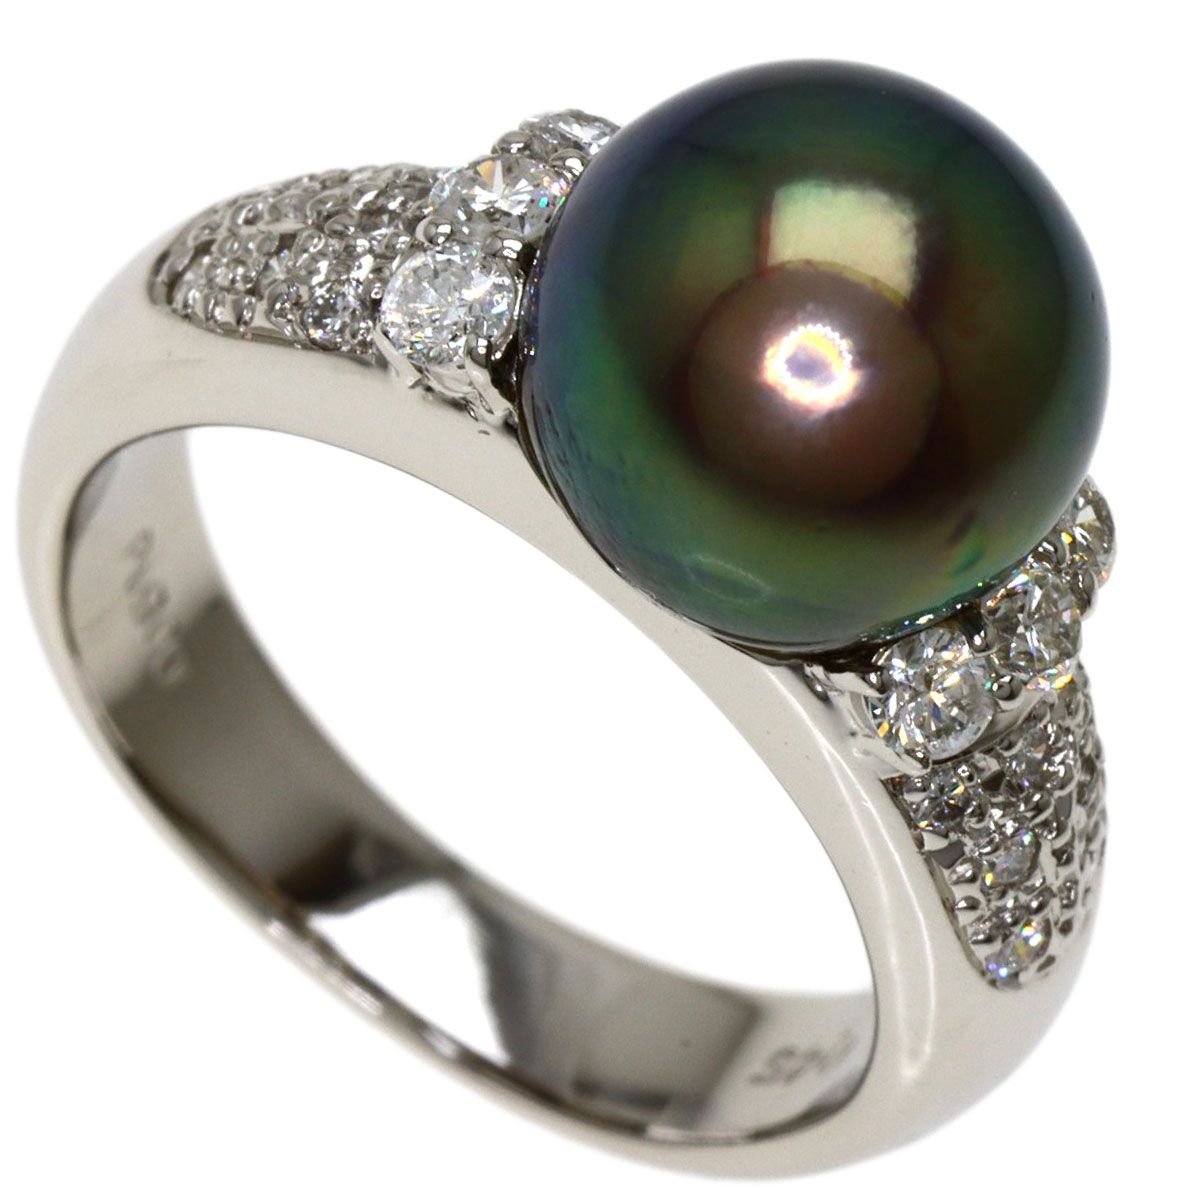 SELECT JEWELRY セレクトジュエリー パール 真珠 ダイヤモンド リング・指輪 PT900 レディース